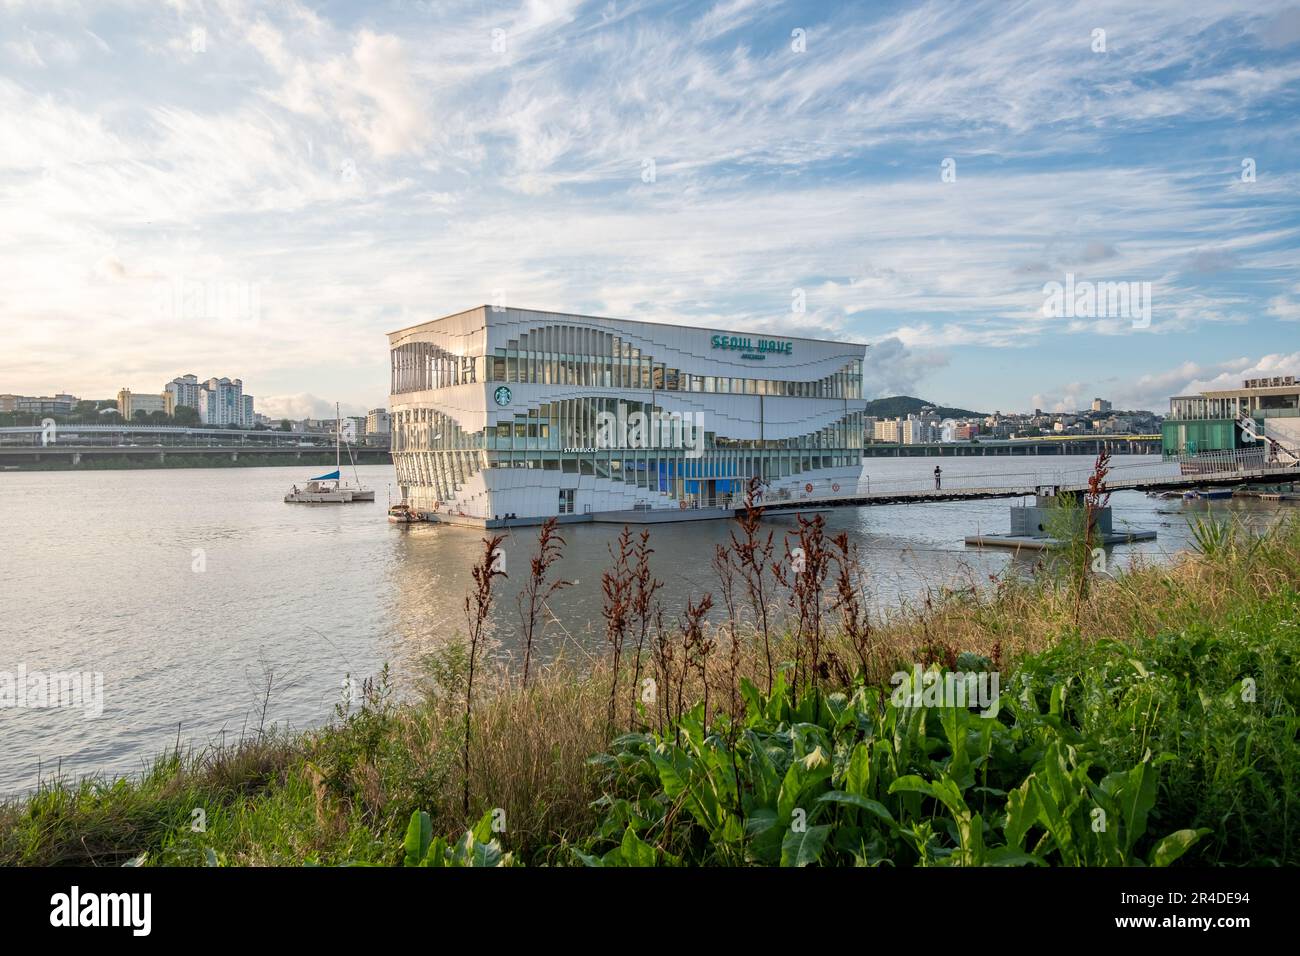 Seoul, Südkorea - 14. Juli 2022: Seoul Wave Art Center Gebäude, schwimmendes Starbucks am Hangang River oder Han River mit Sonnenuntergang. Stockfoto